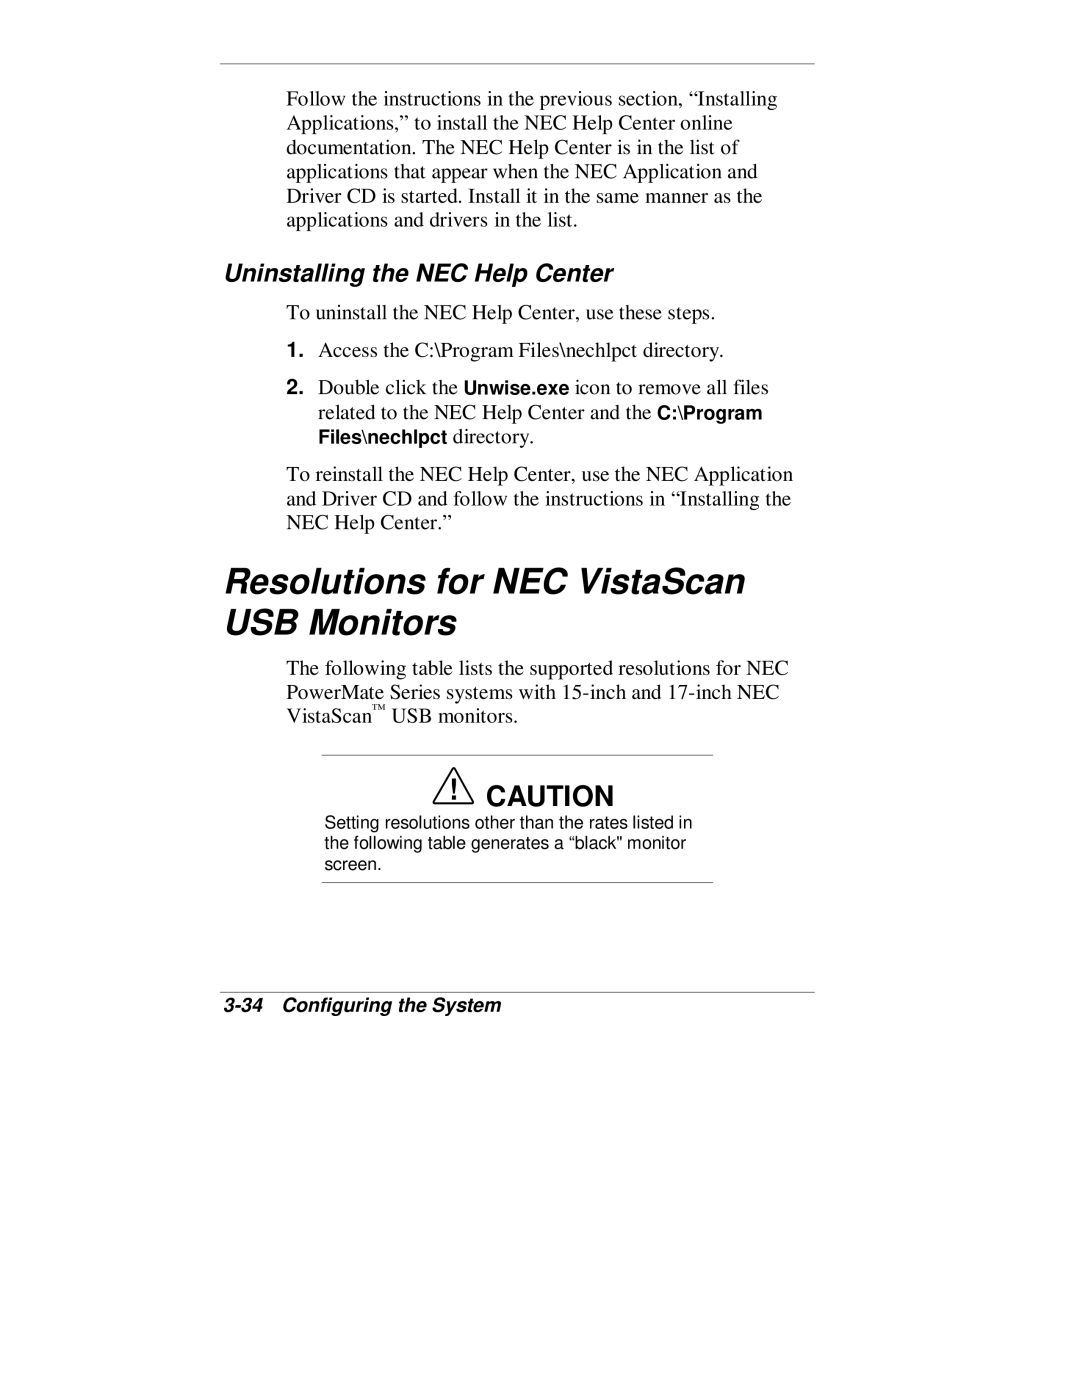 NEC VT 300 Series manual Resolutions for NEC VistaScan USB Monitors, Uninstalling the NEC Help Center 